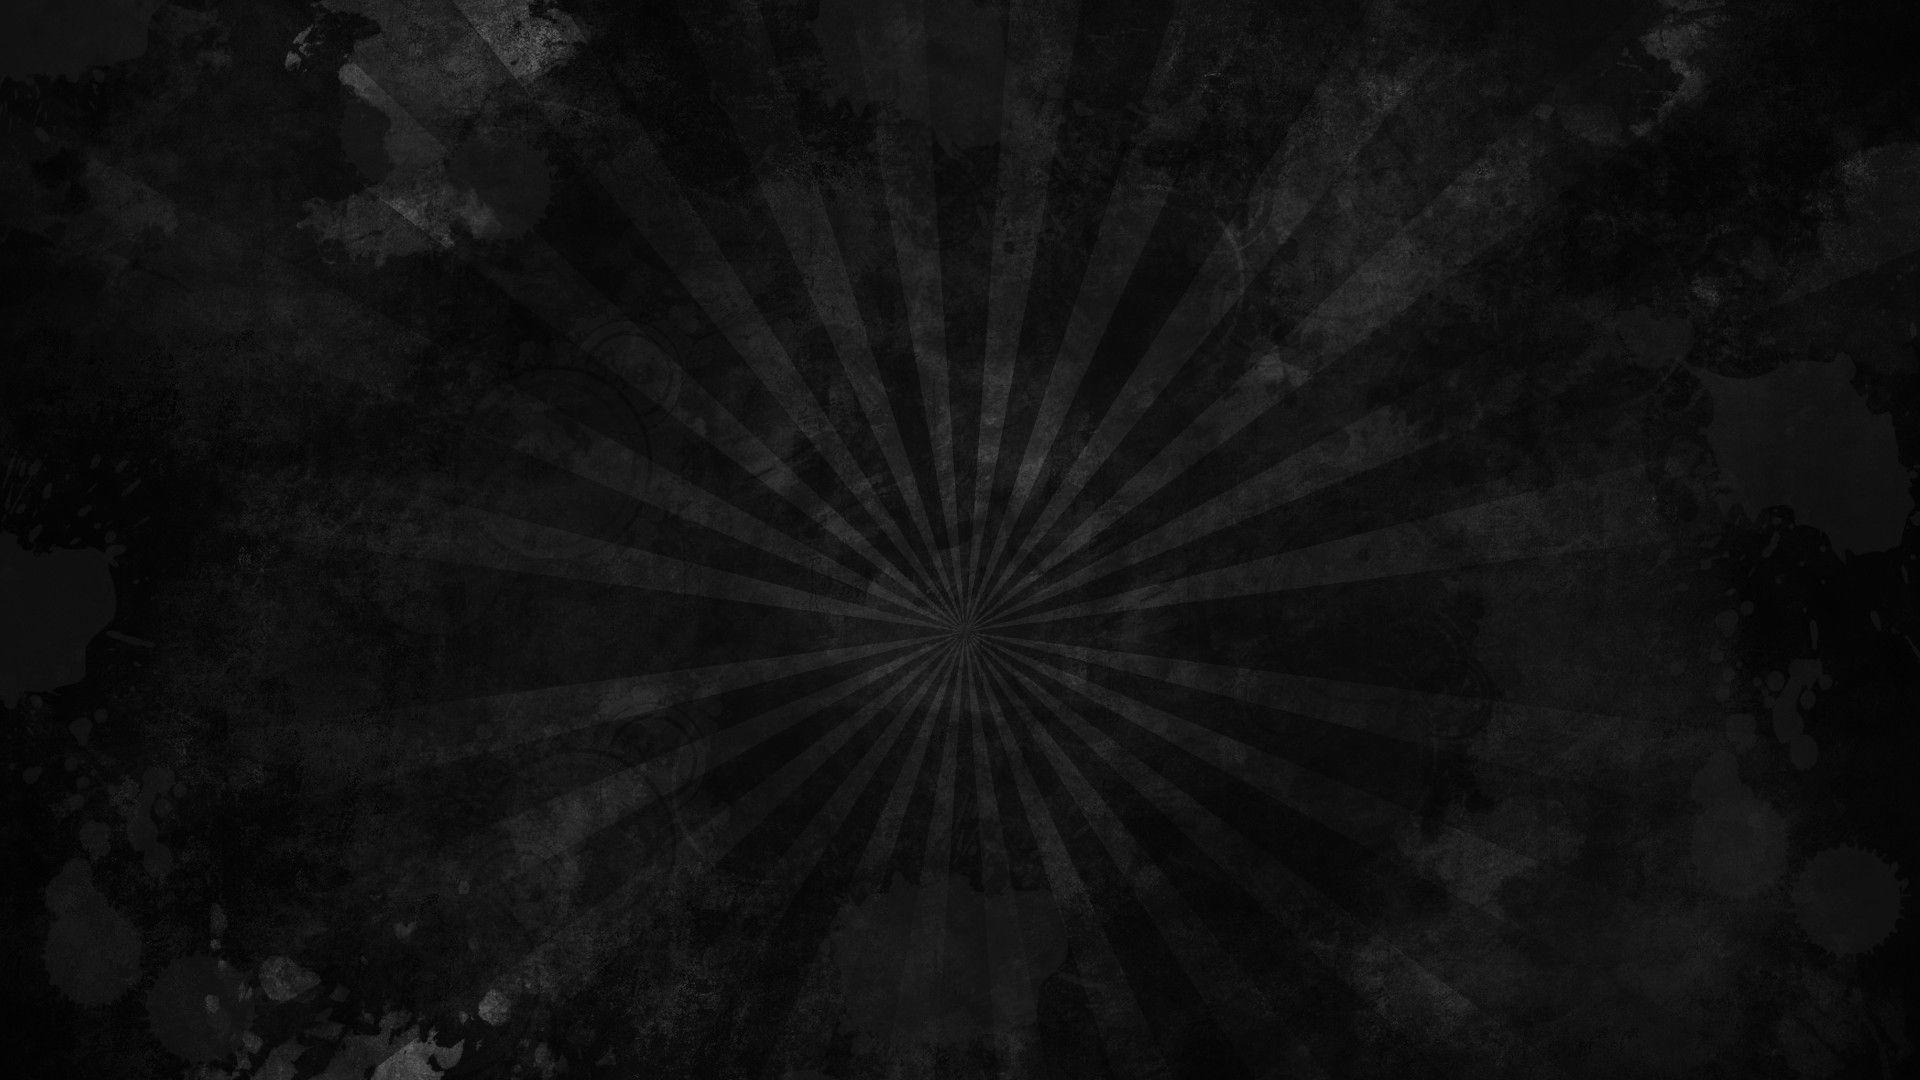 Aesthetic Grunge Desktop Wallpapers Top Free Aesthetic Grunge Desktop Backgrounds Wallpaperaccess Aesthetic hipster wallpapers desktop background. aesthetic grunge desktop wallpapers